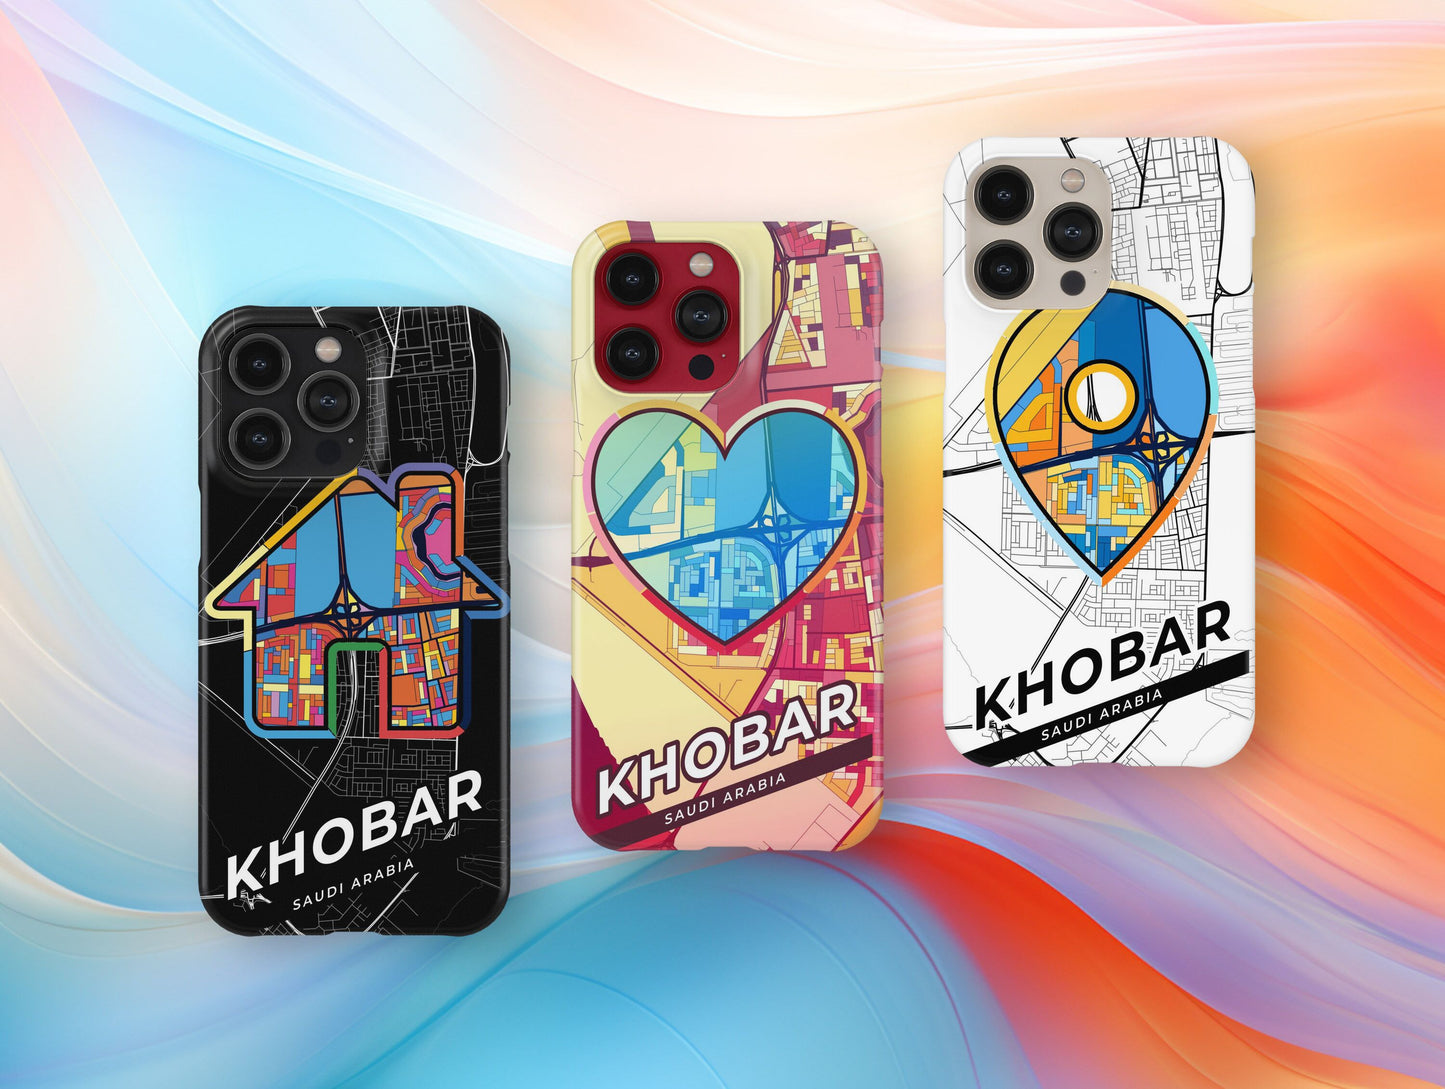 Khobar Saudi Arabia slim phone case with colorful icon. Birthday, wedding or housewarming gift. Couple match cases.